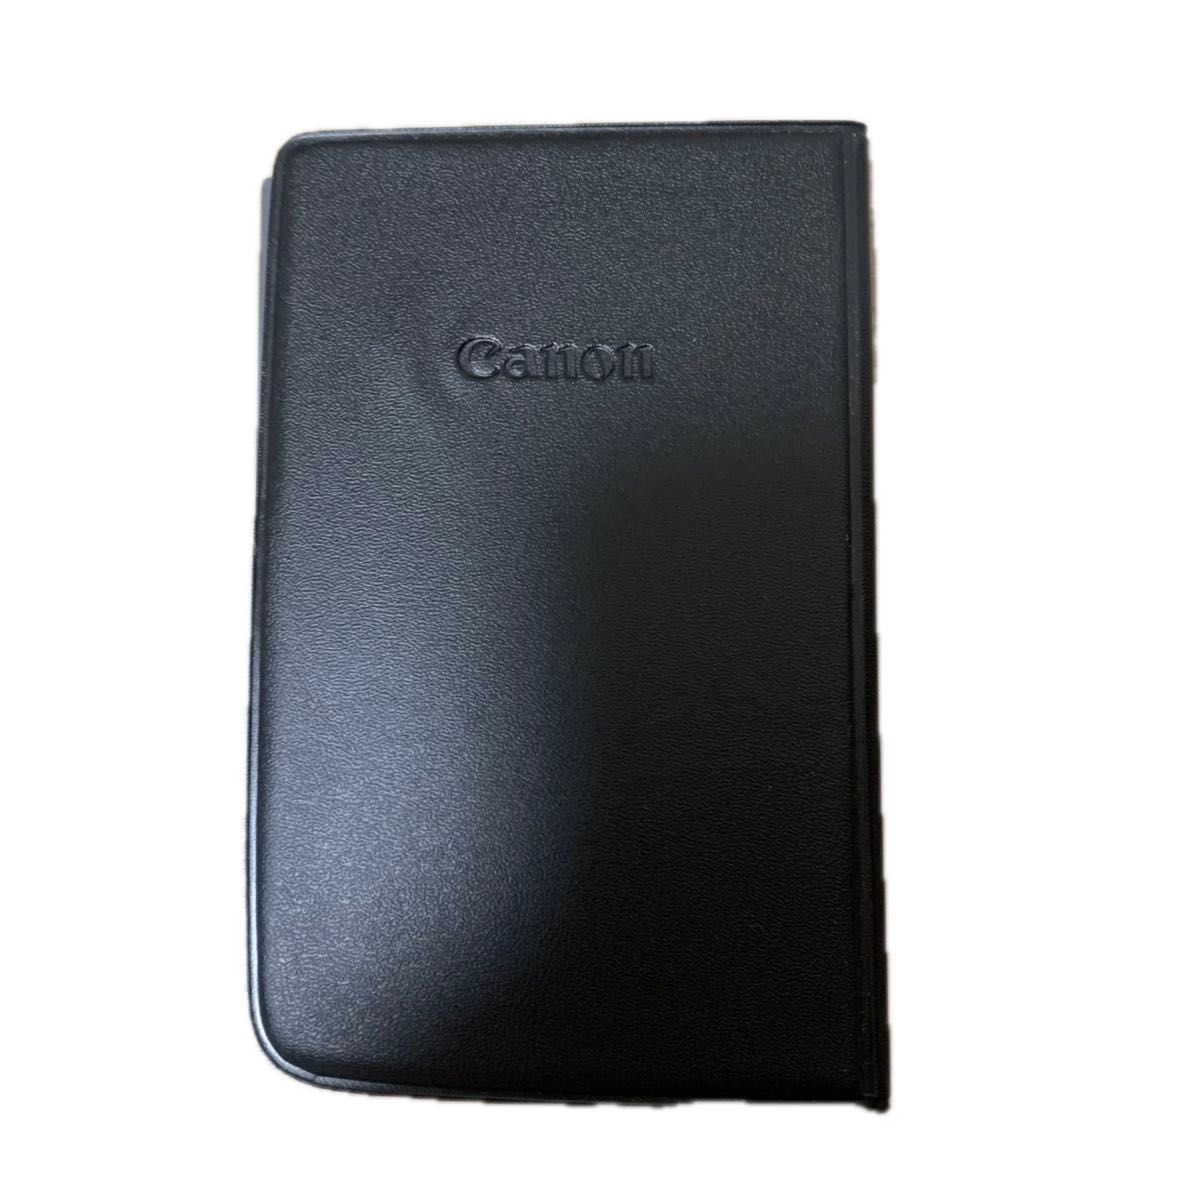 Canonキャノン手帳型ポケット電卓計算機LS-12TUⅡ12桁